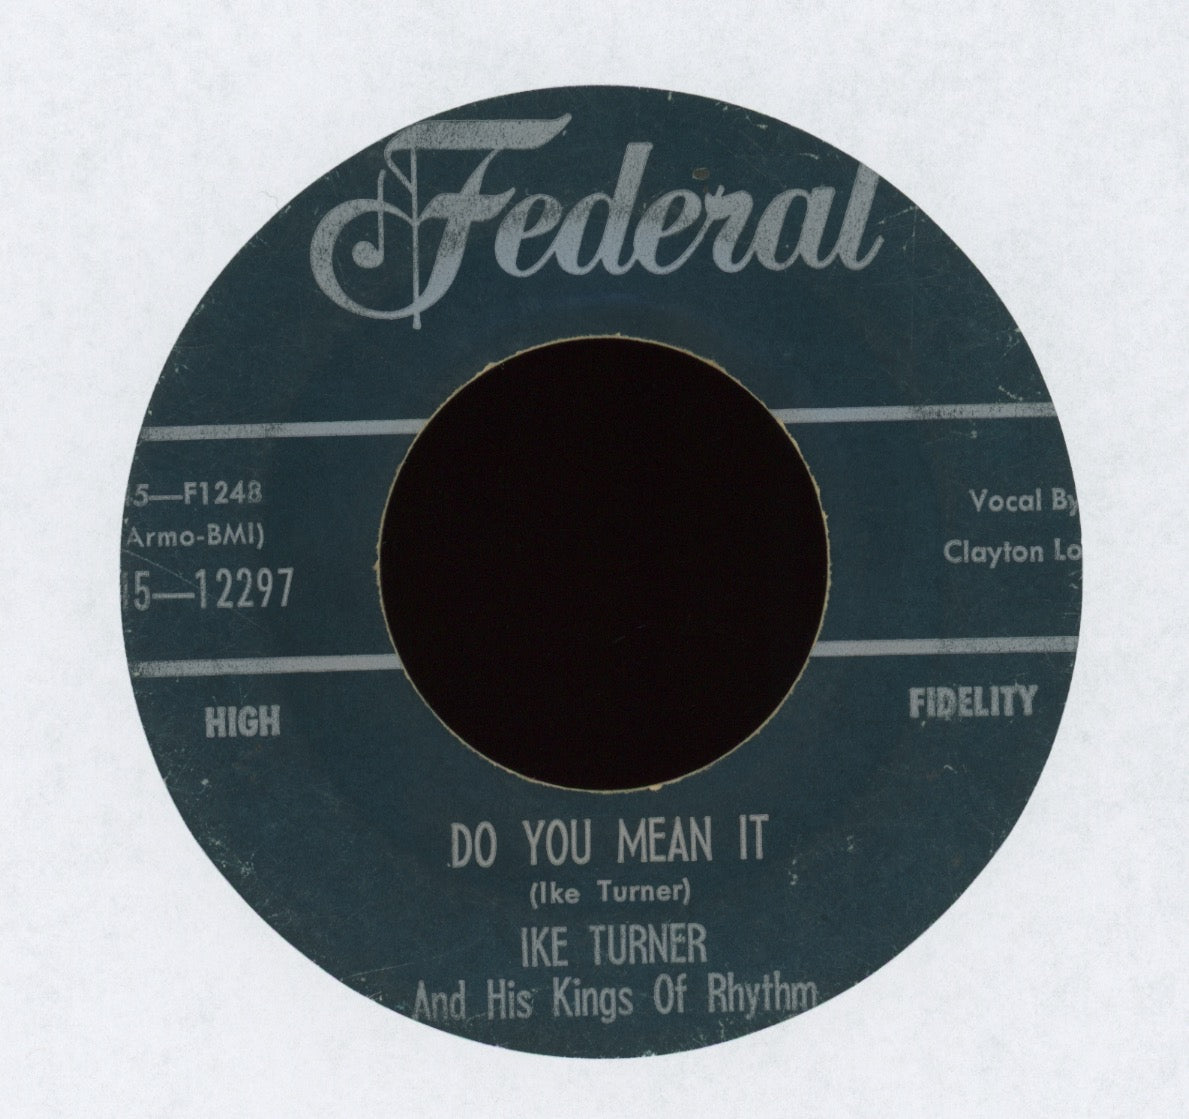 Ike Turner's Kings Of Rhythm - She Made My Blood Run Cold on Federal